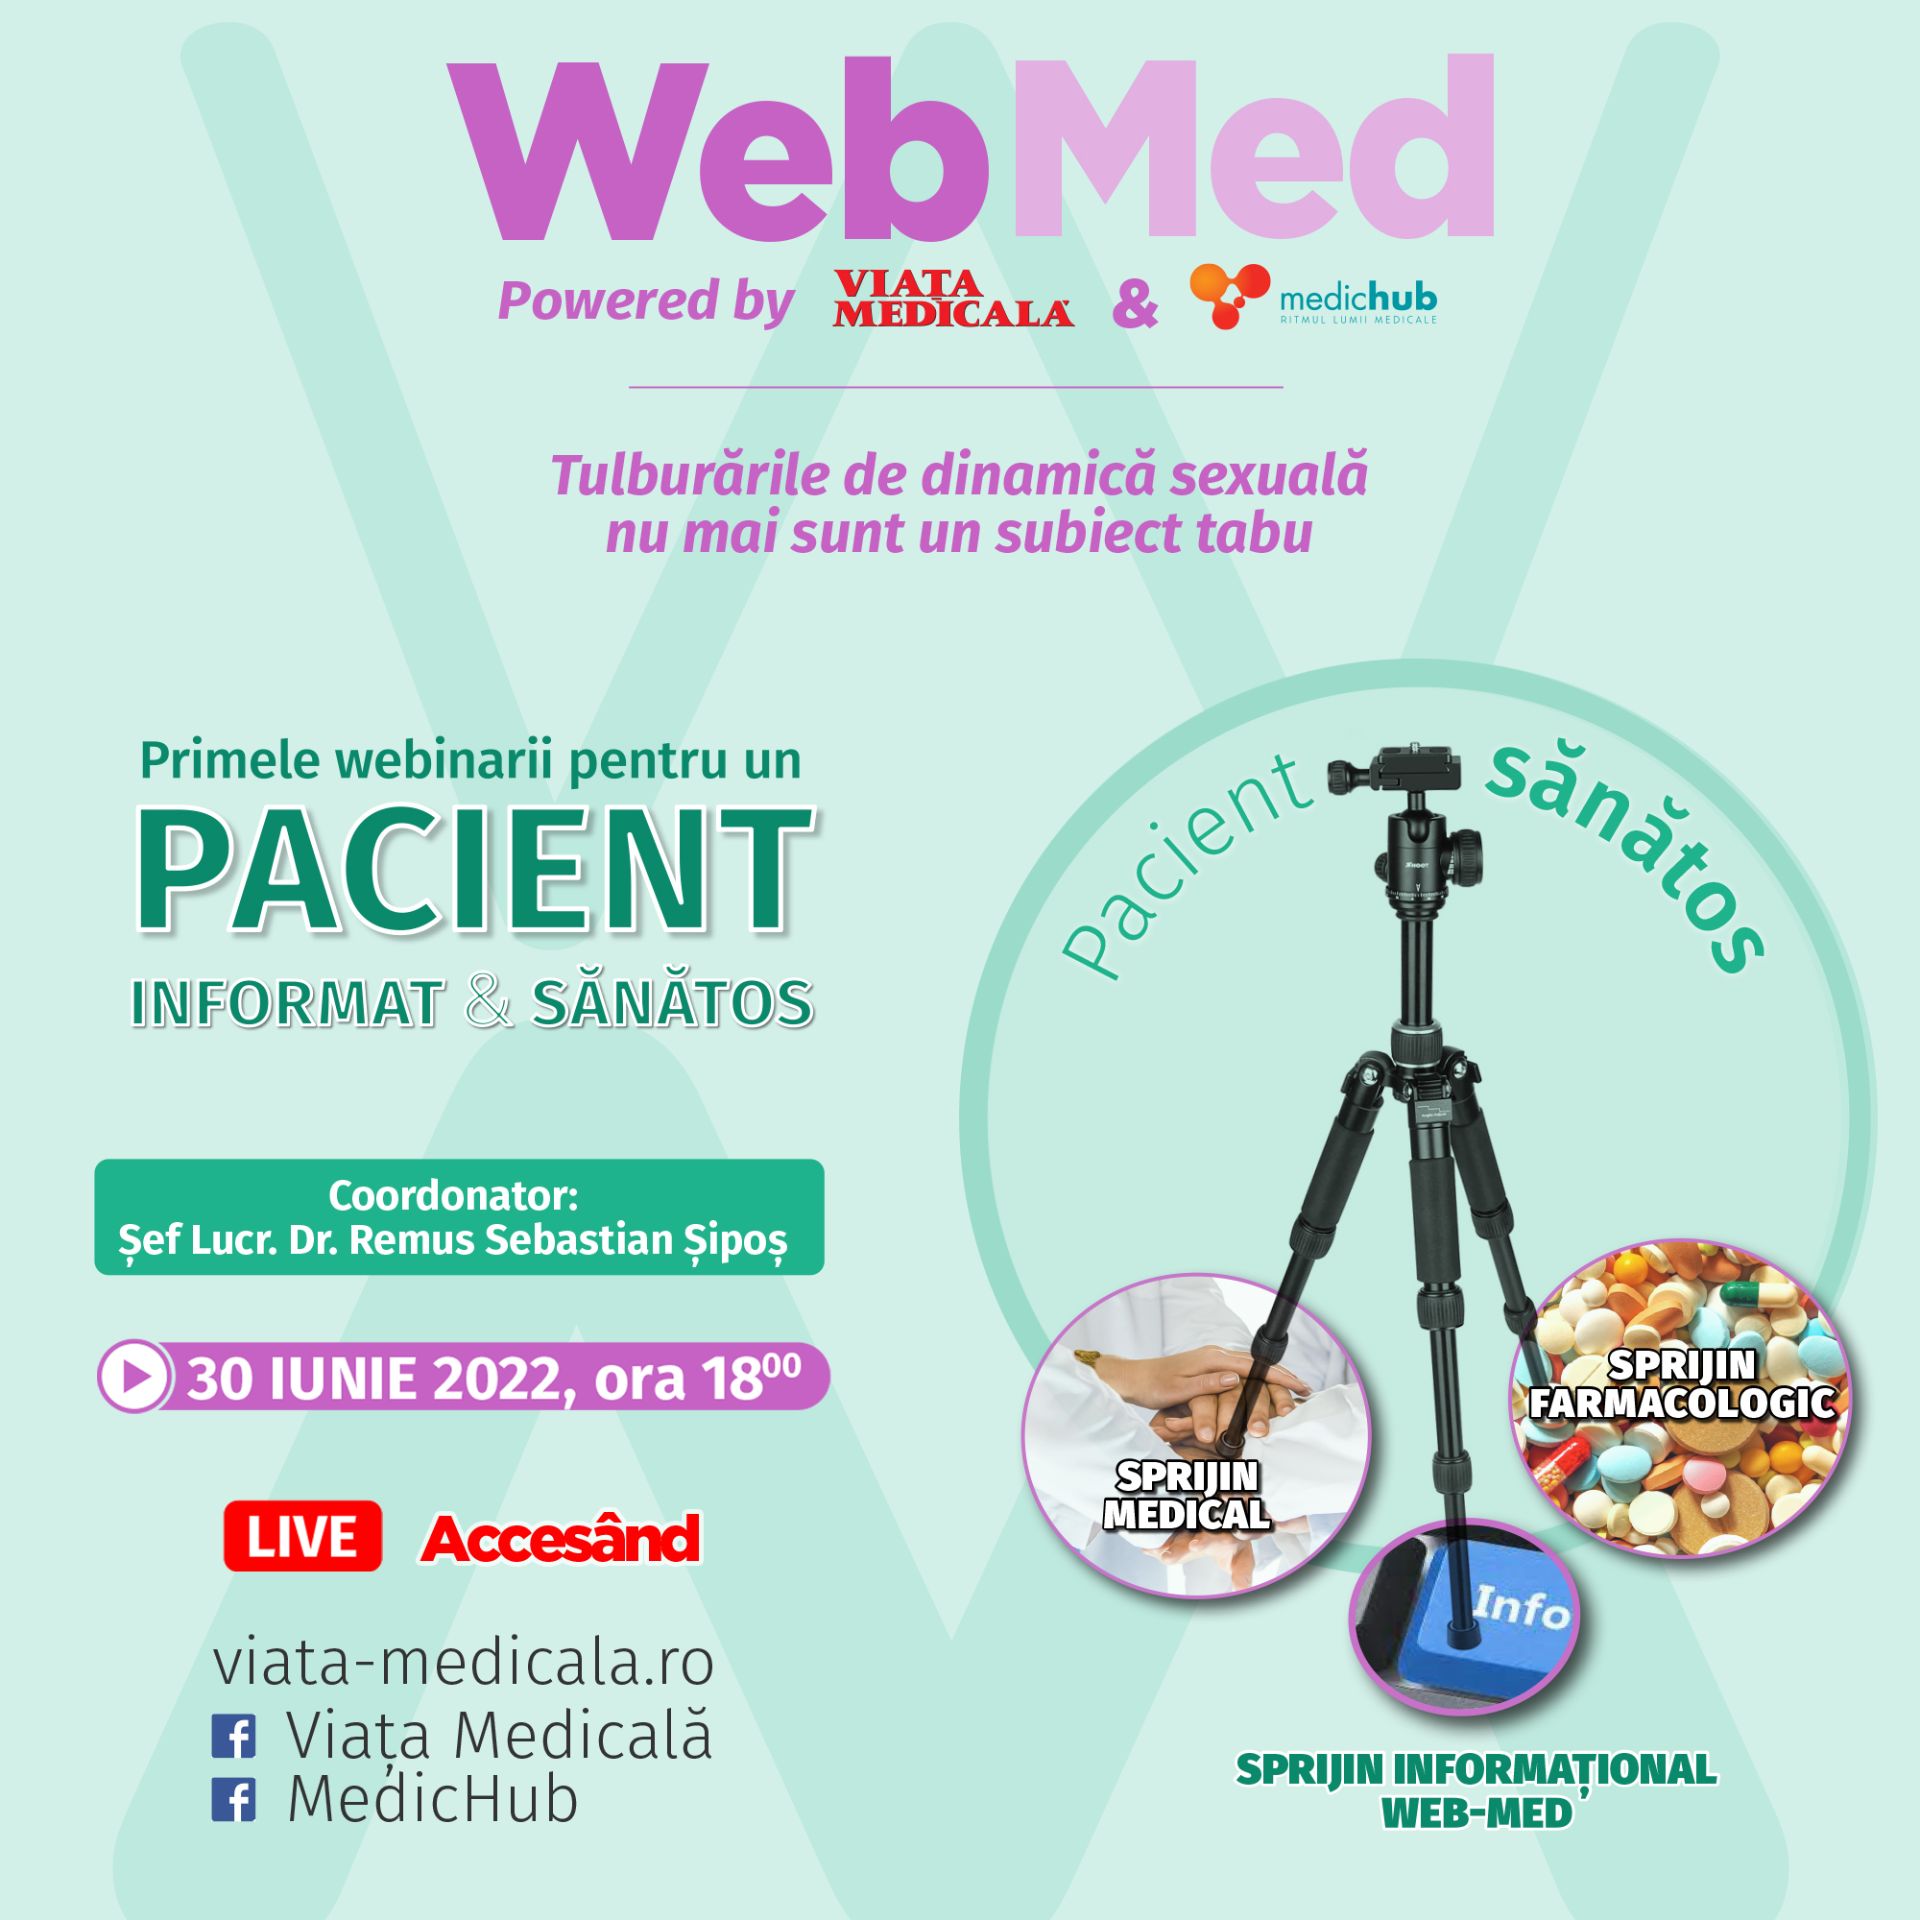 WebMed